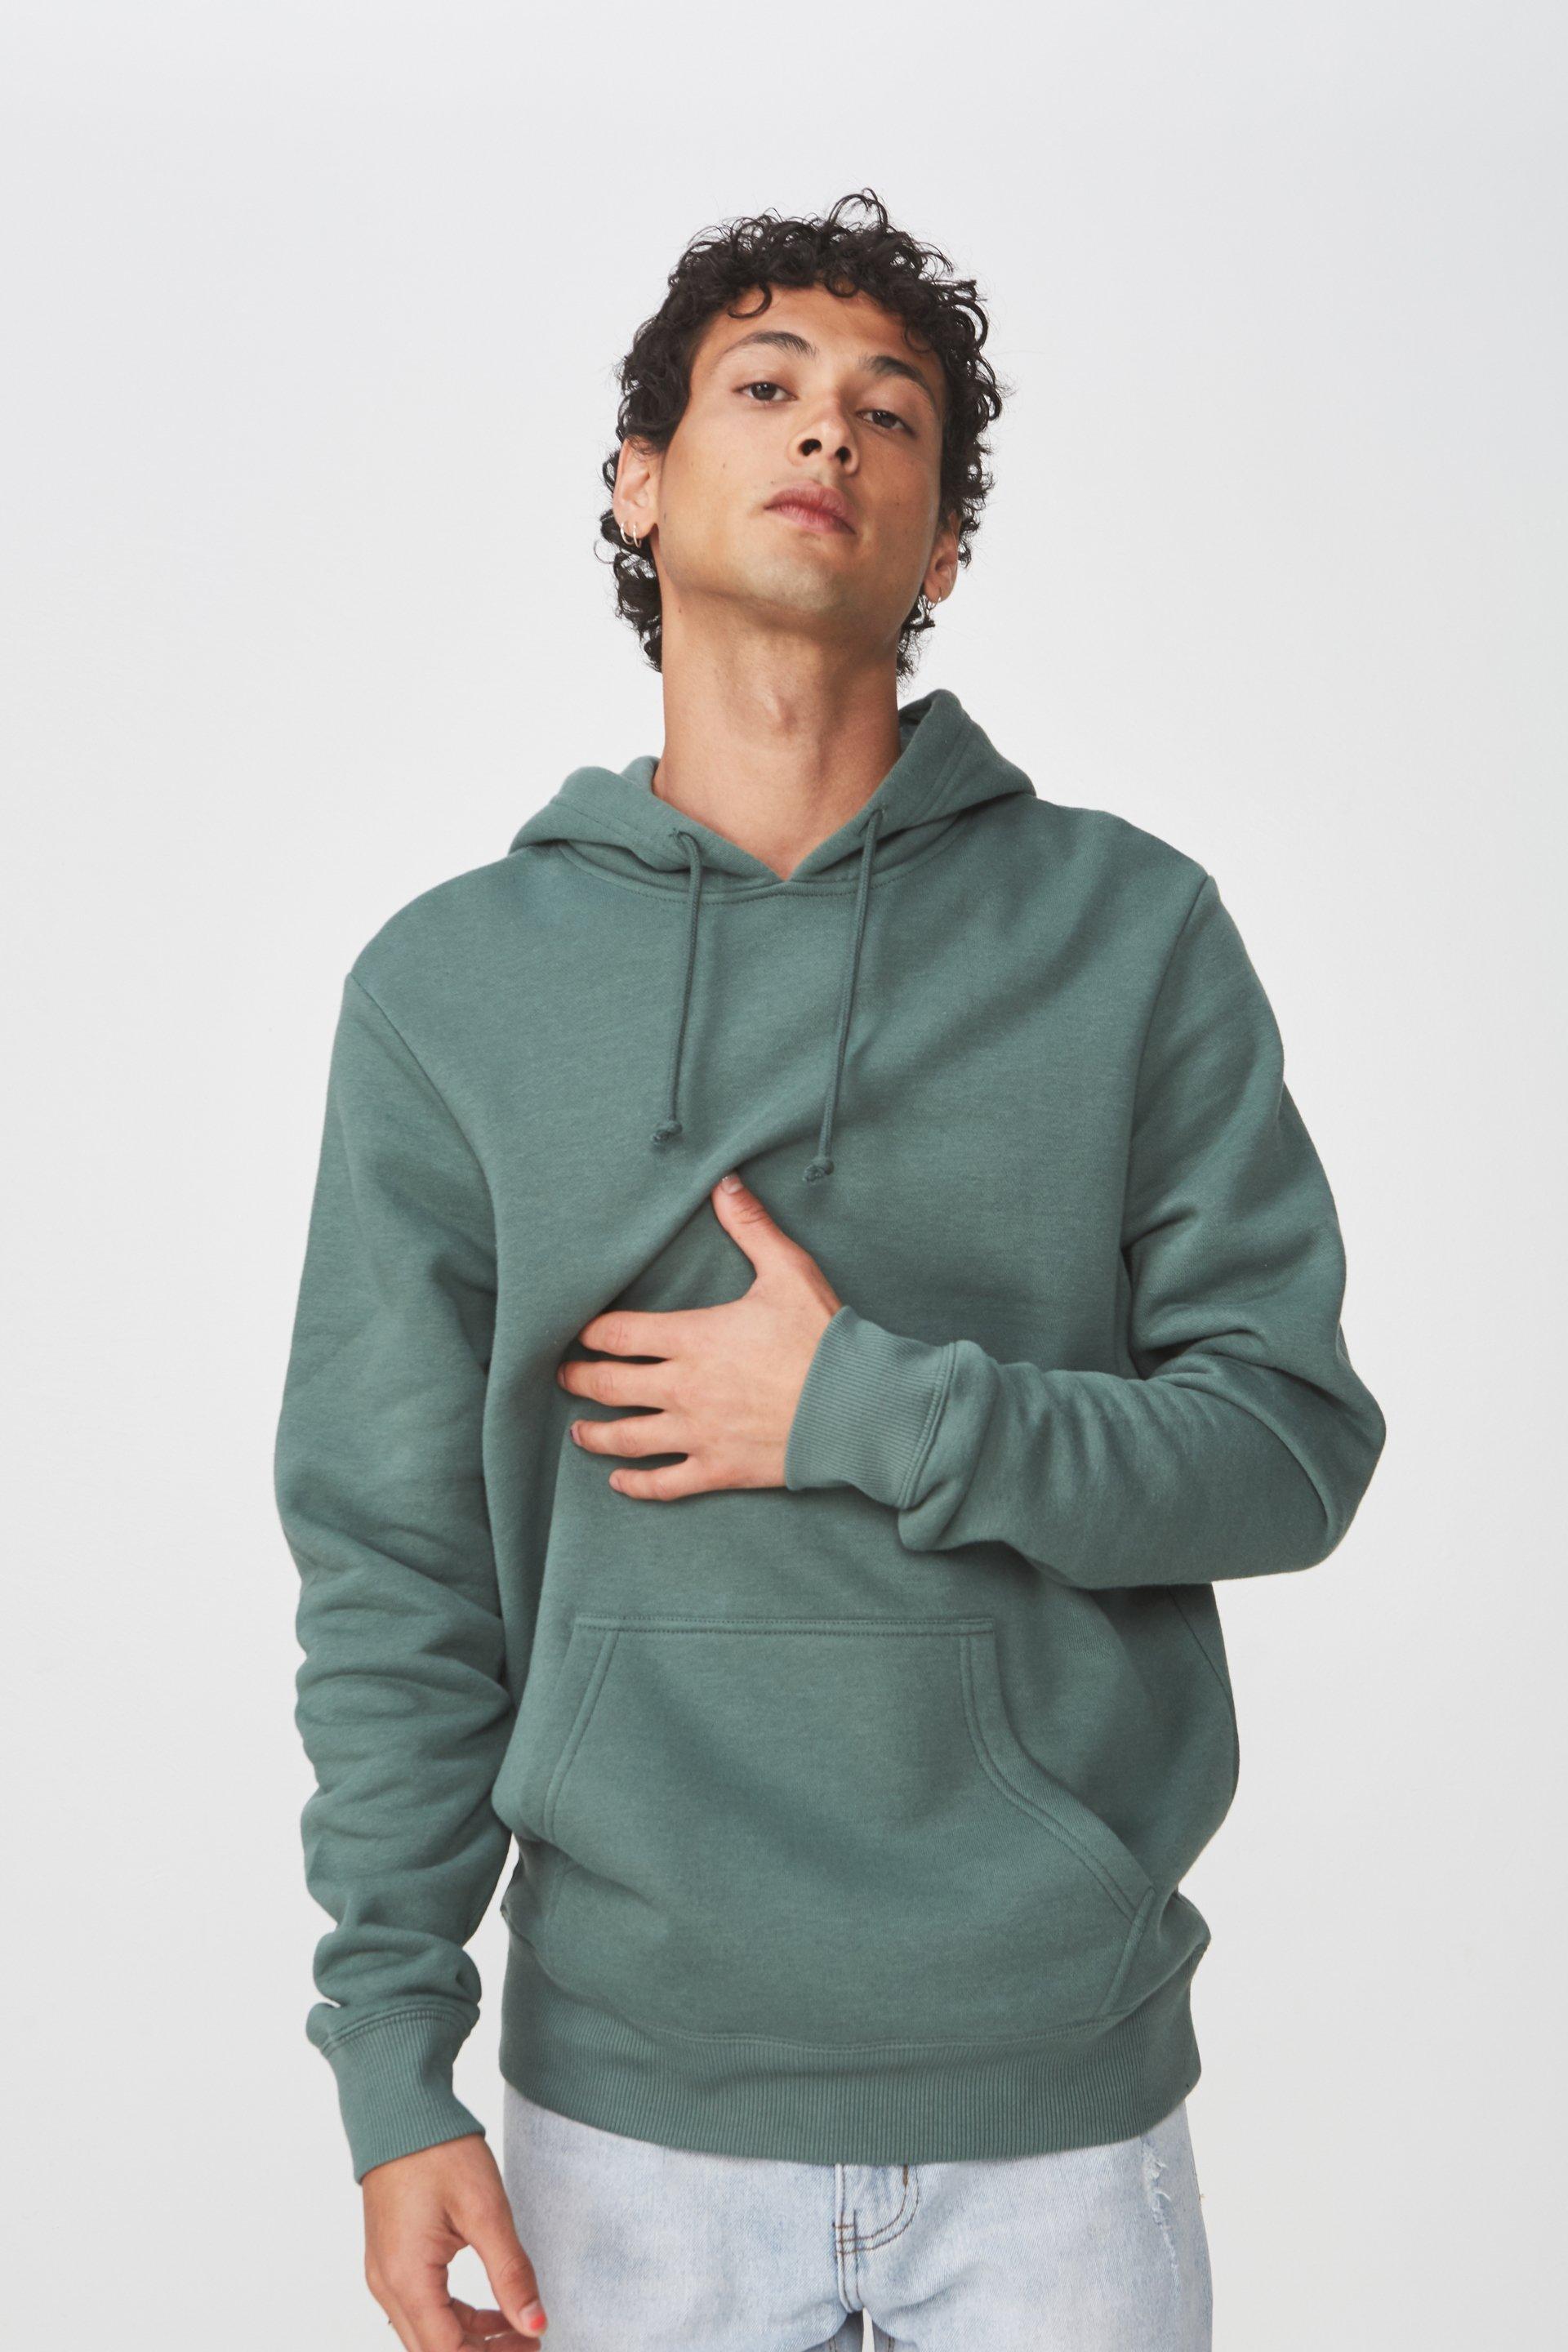 Fleece pullover - khaki Cotton On Hoodies & Sweats | Superbalist.com